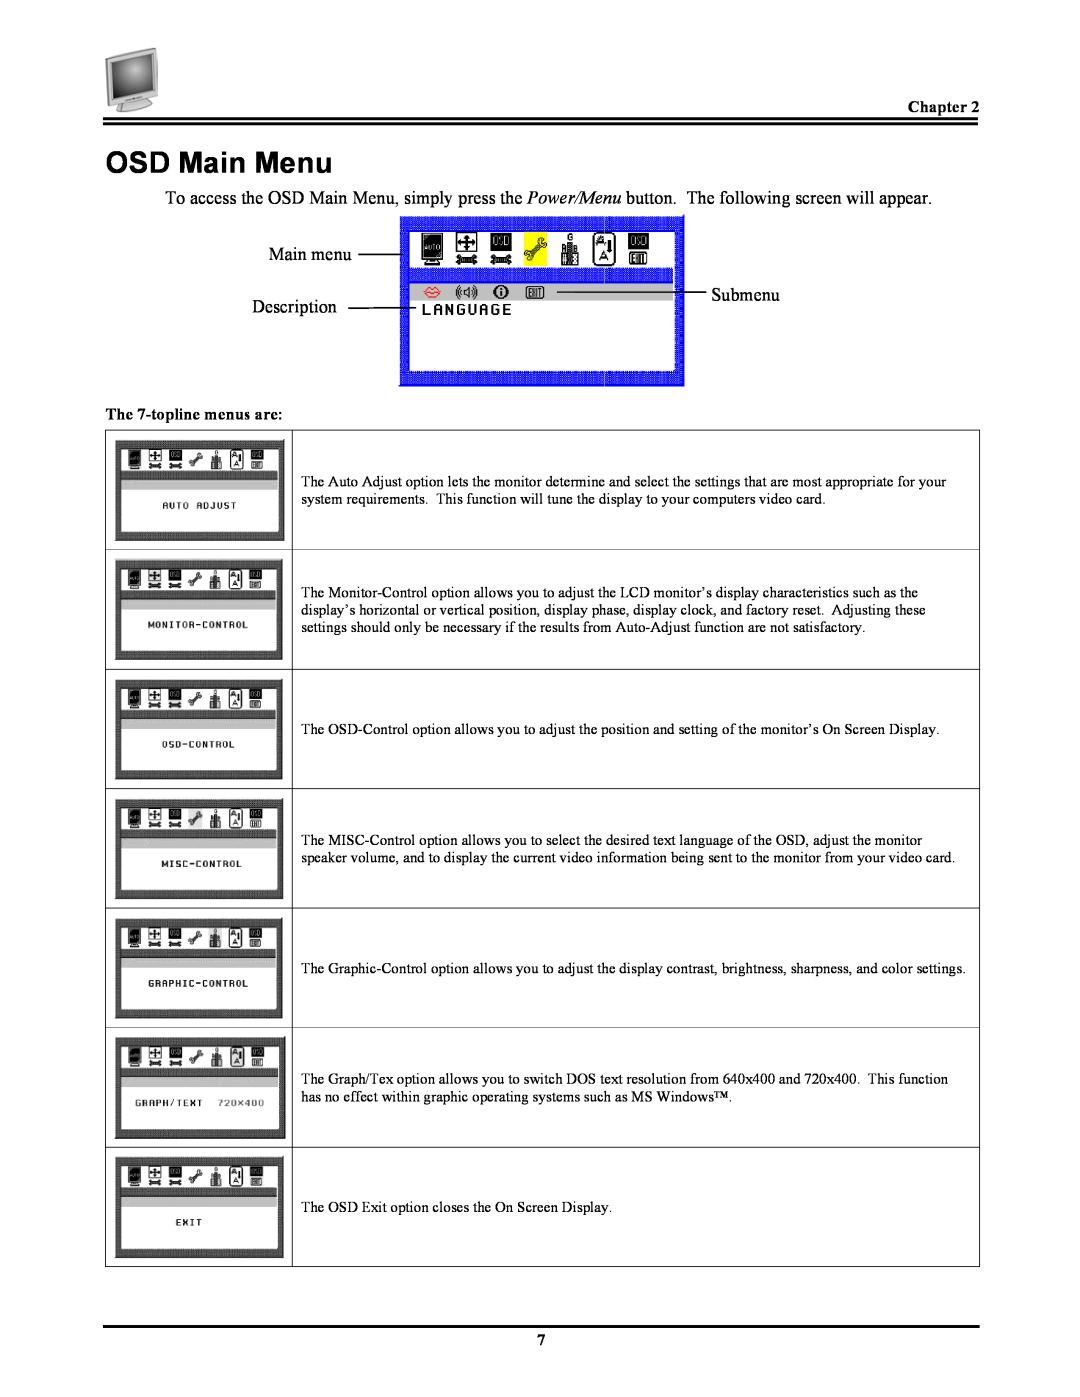 Planar FWT1744NU manual OSD Main Menu, Main menu, Description, Chapter, The 7-topline menus are 